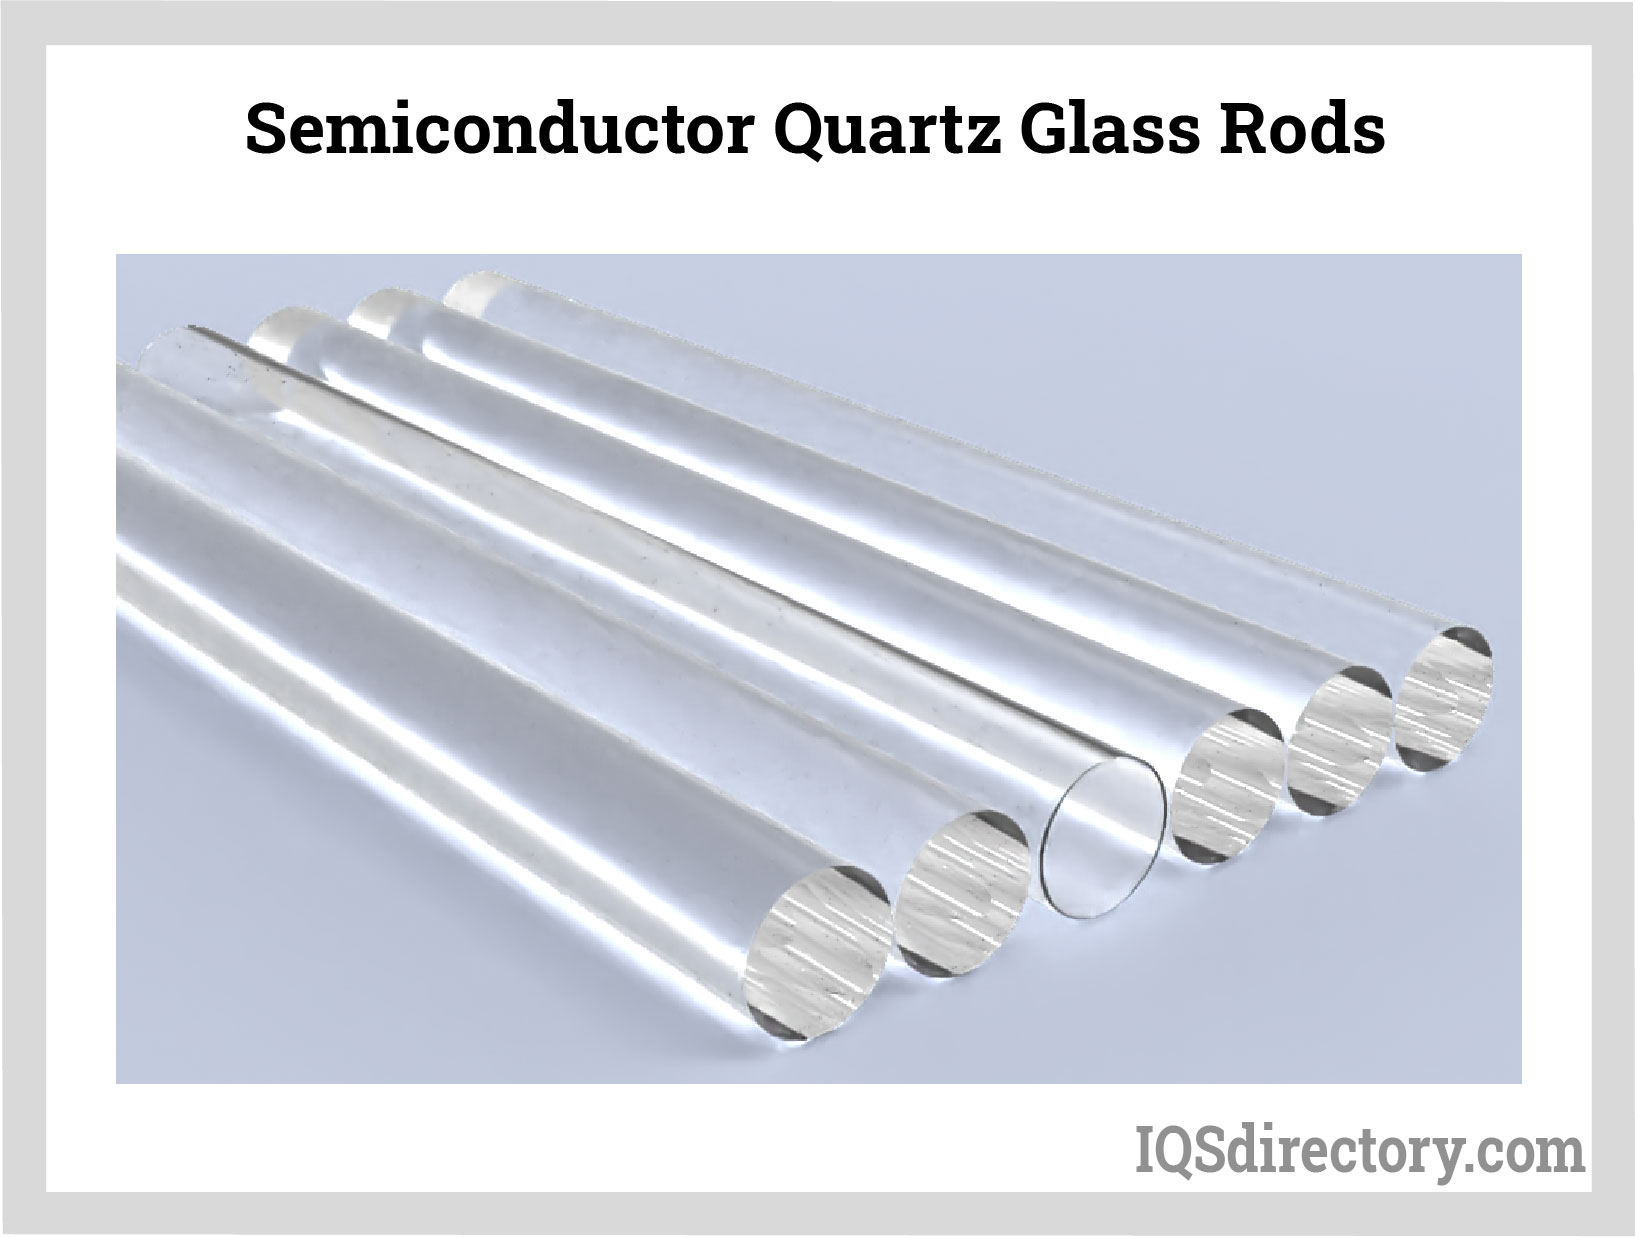 Semiconductor Quartz Glass Rods